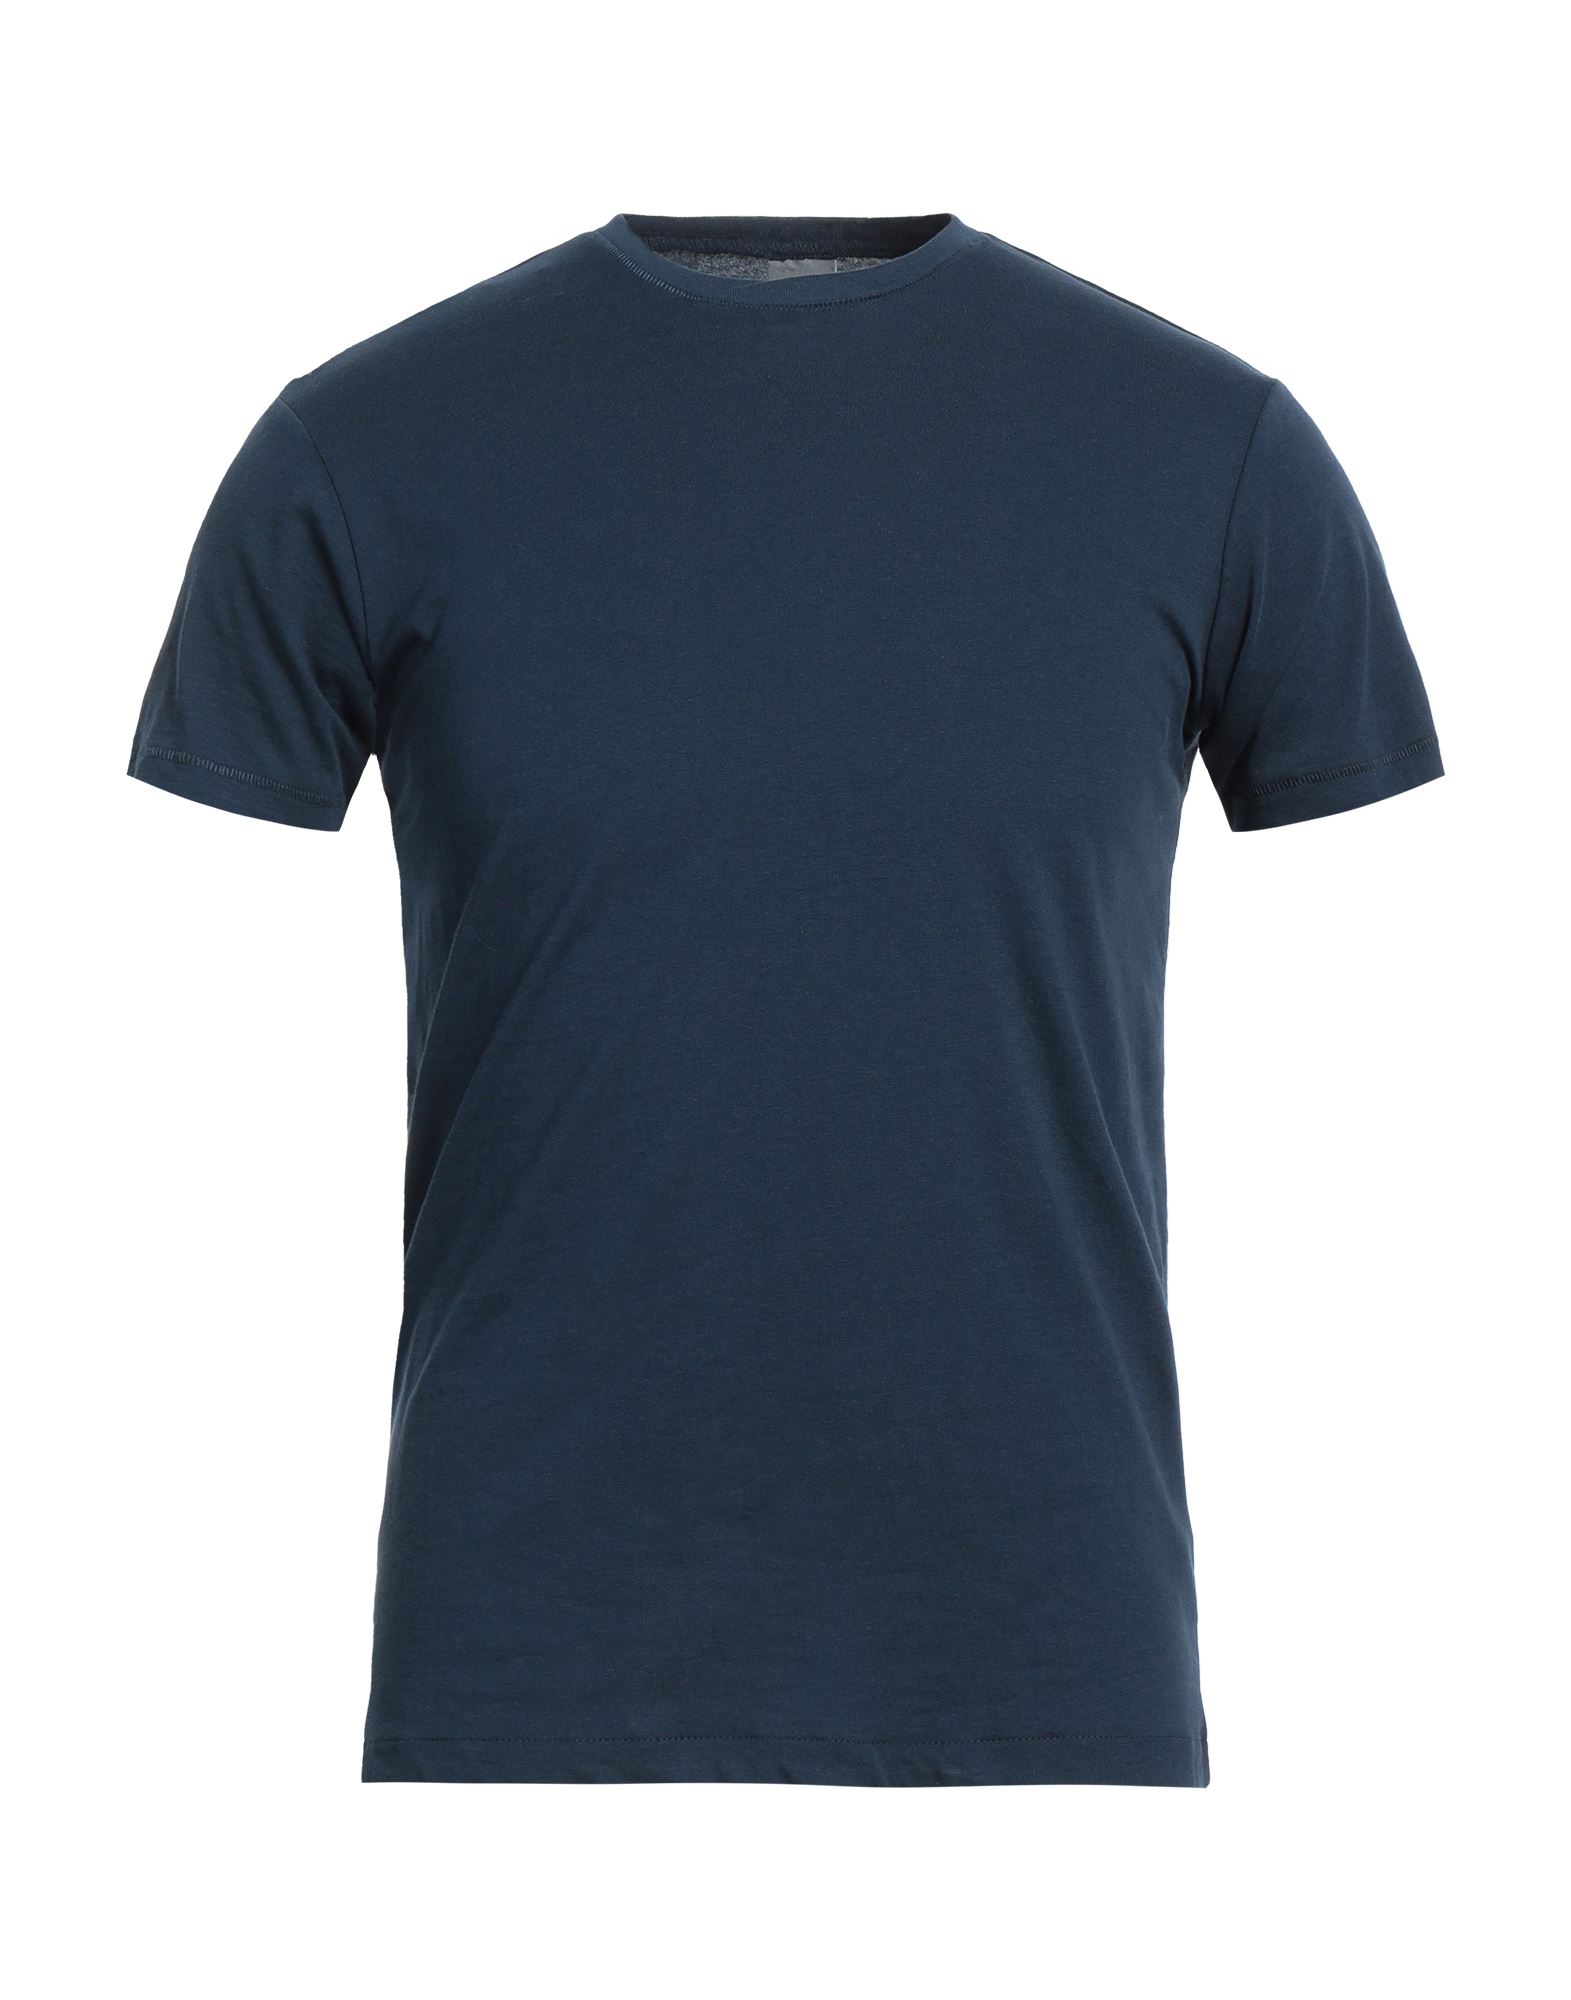 PRIMO EMPORIO T-shirts Herren Nachtblau von PRIMO EMPORIO